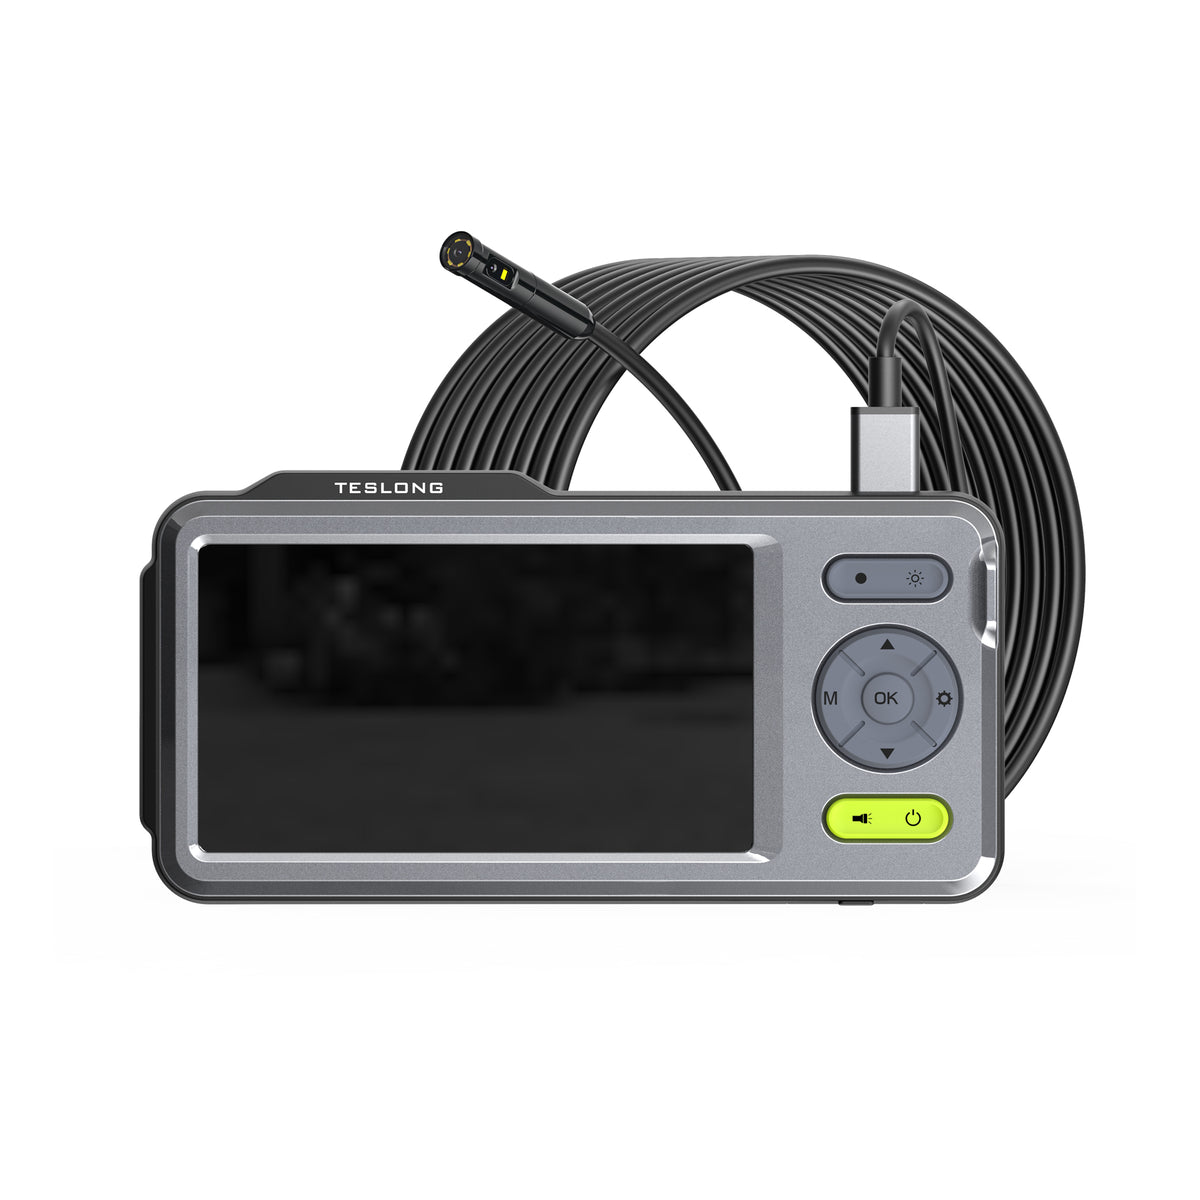 Teslong Digital Endoscope Inspection Camera 16ft MS450-NTC